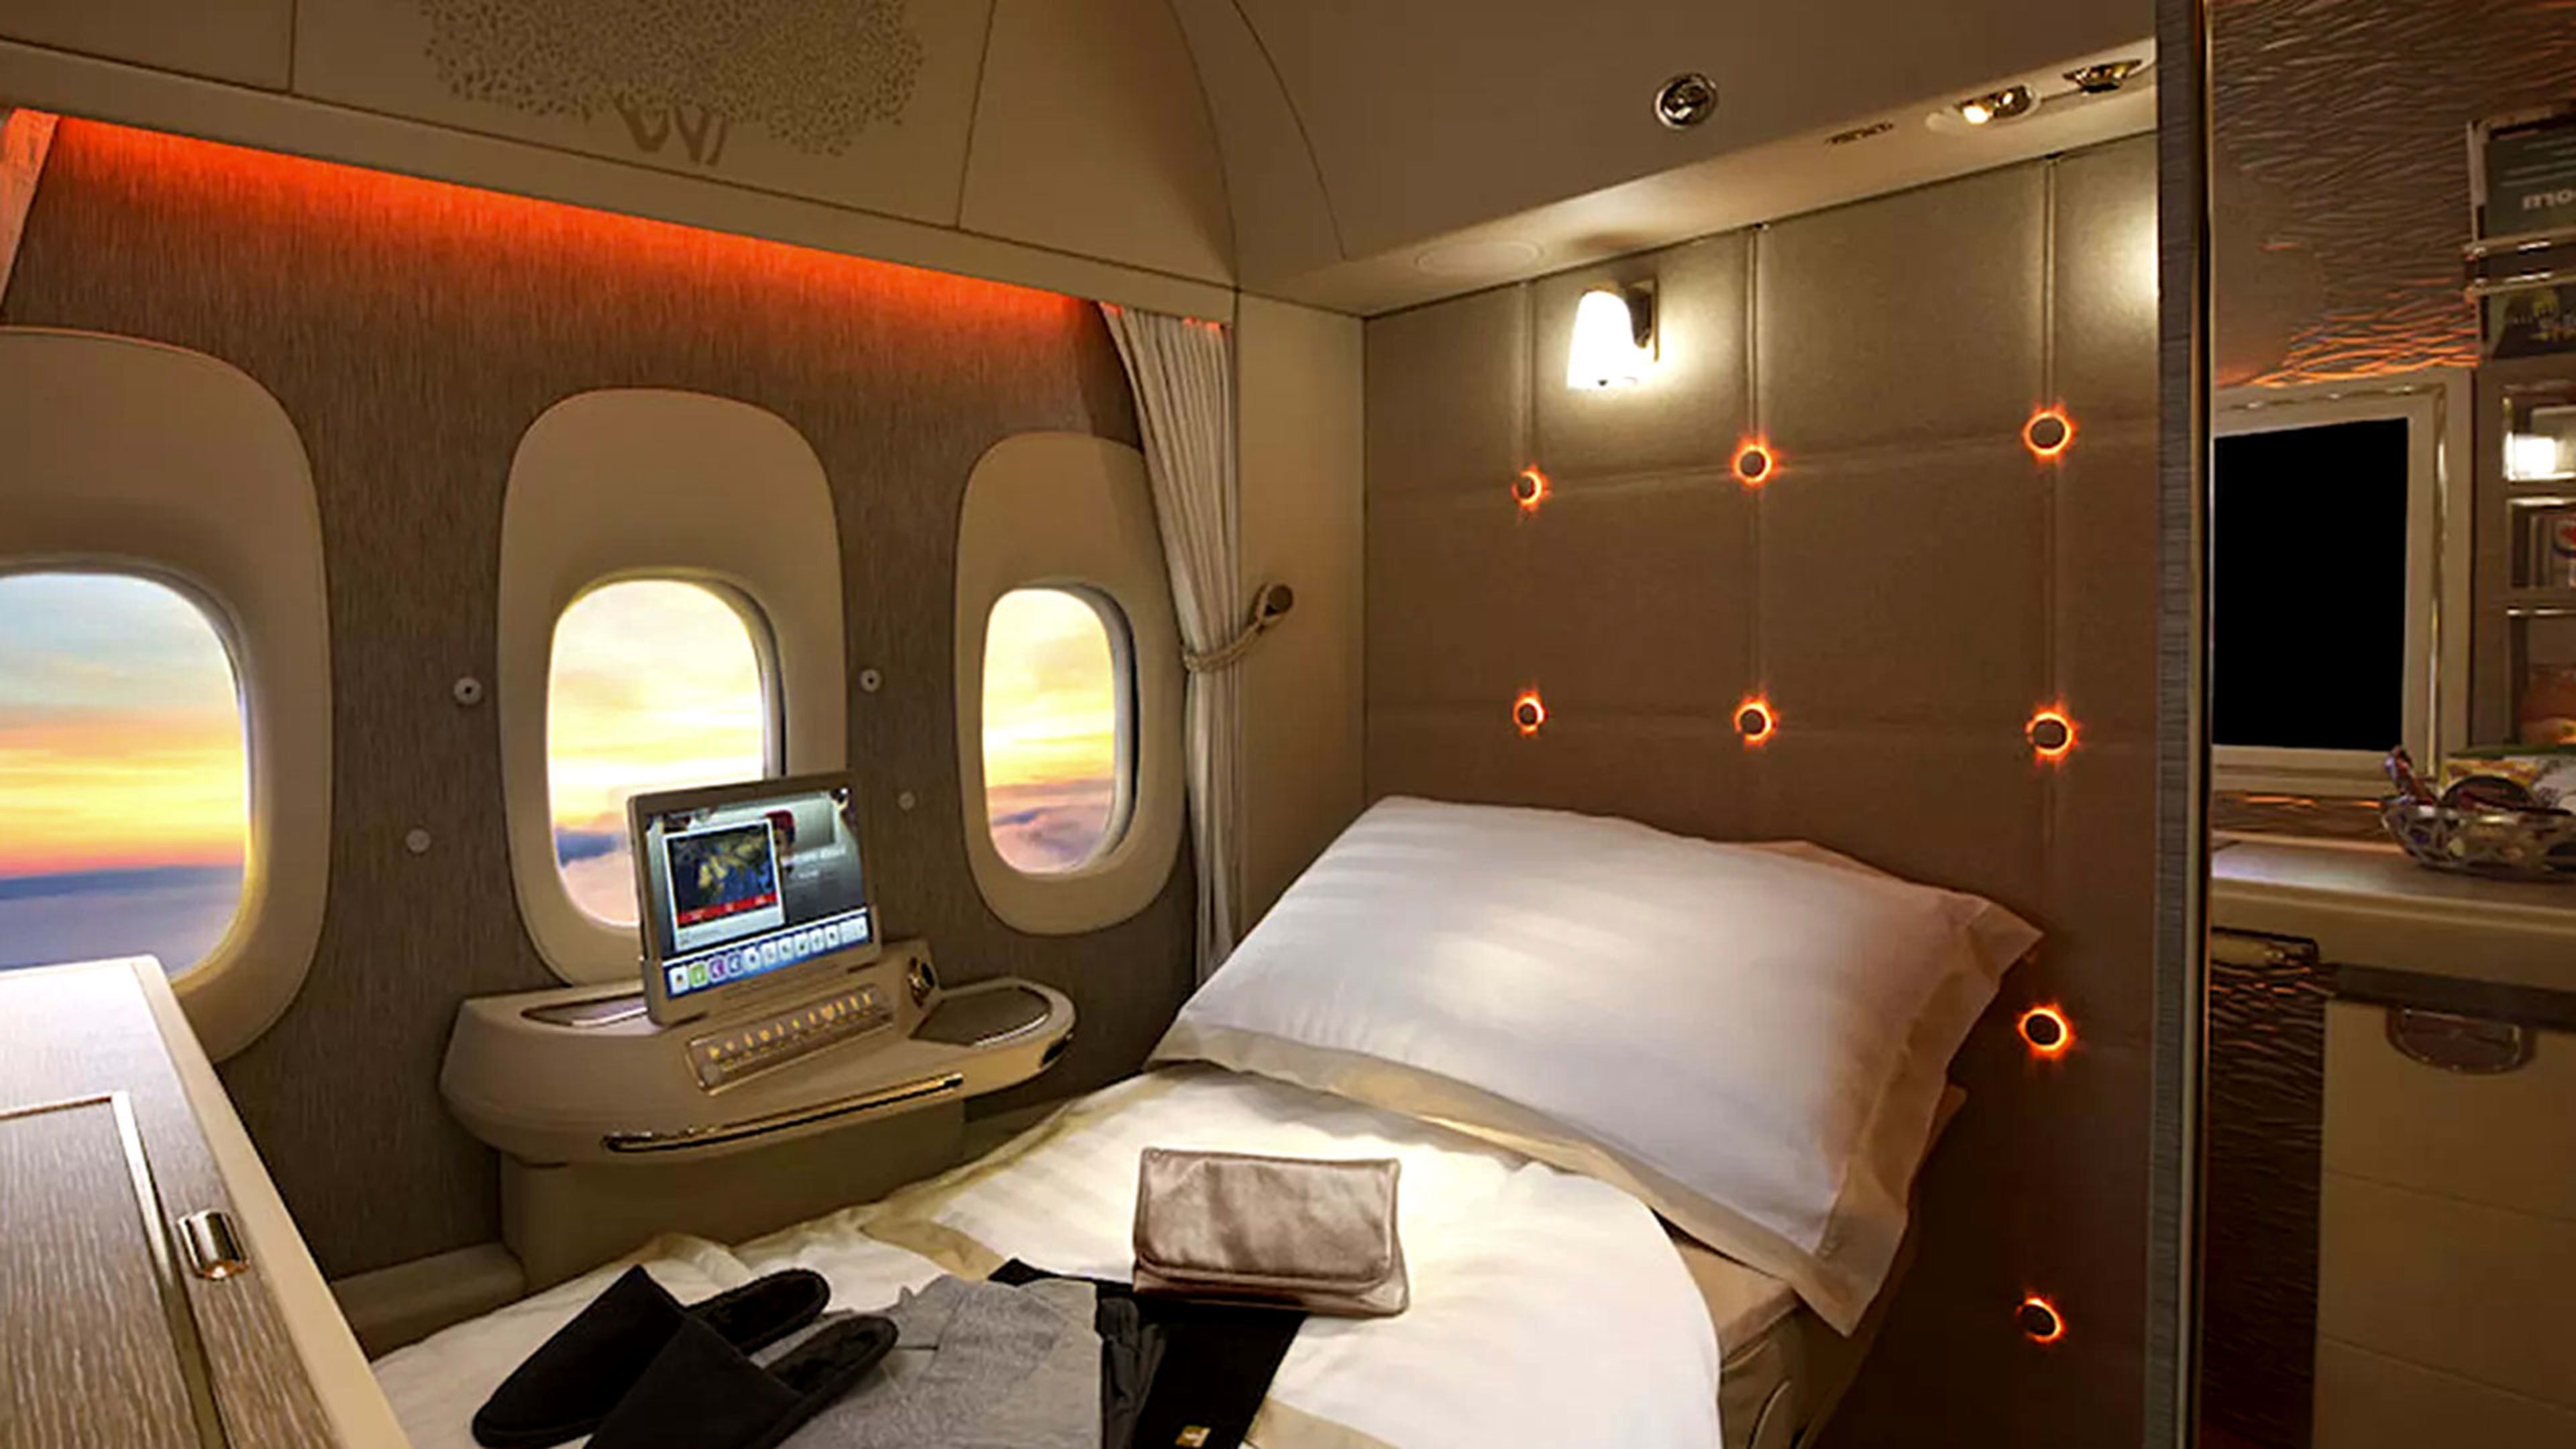 Emirates has a new plane with virtual windows and “zero-gravity” seats